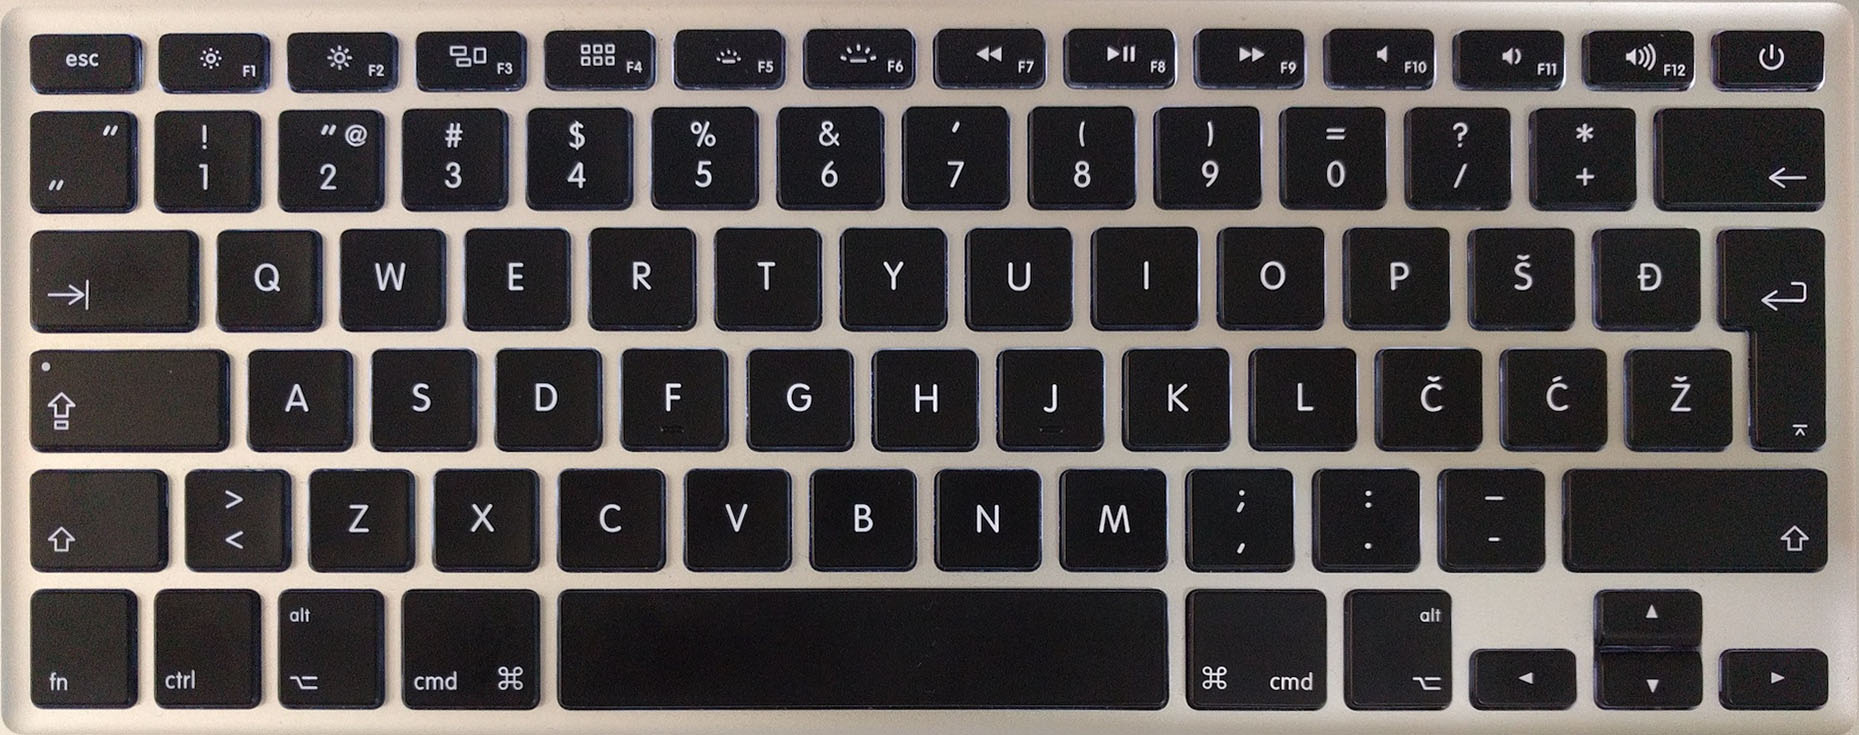 Pc keyboard for mac show all open windows on mac